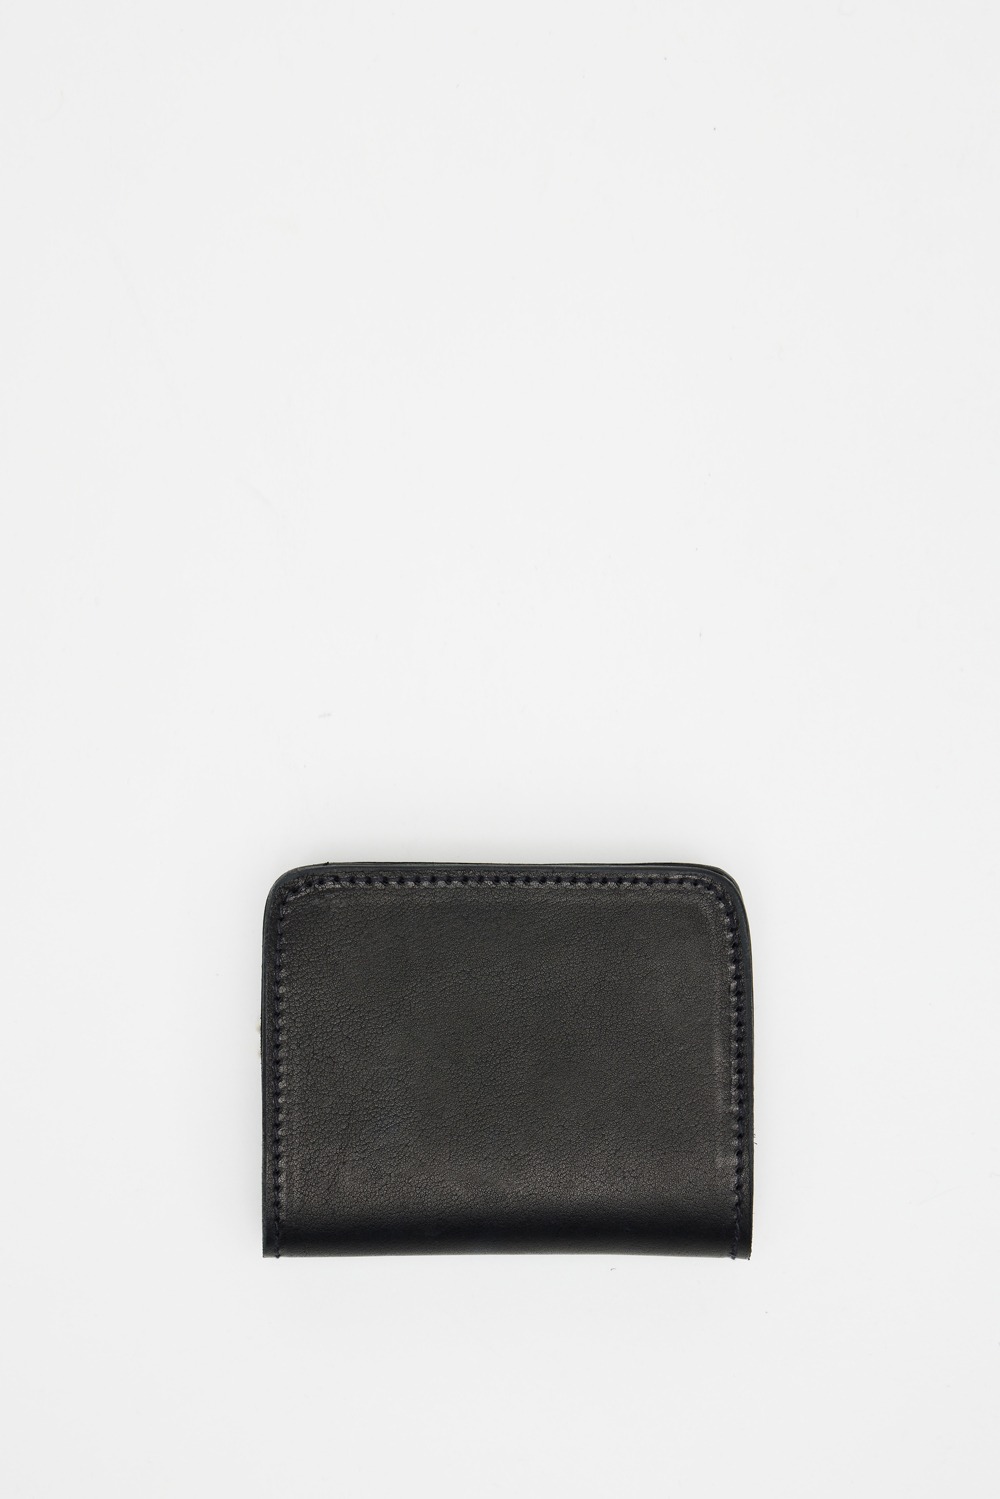 C8 Zipped Wallet - Black